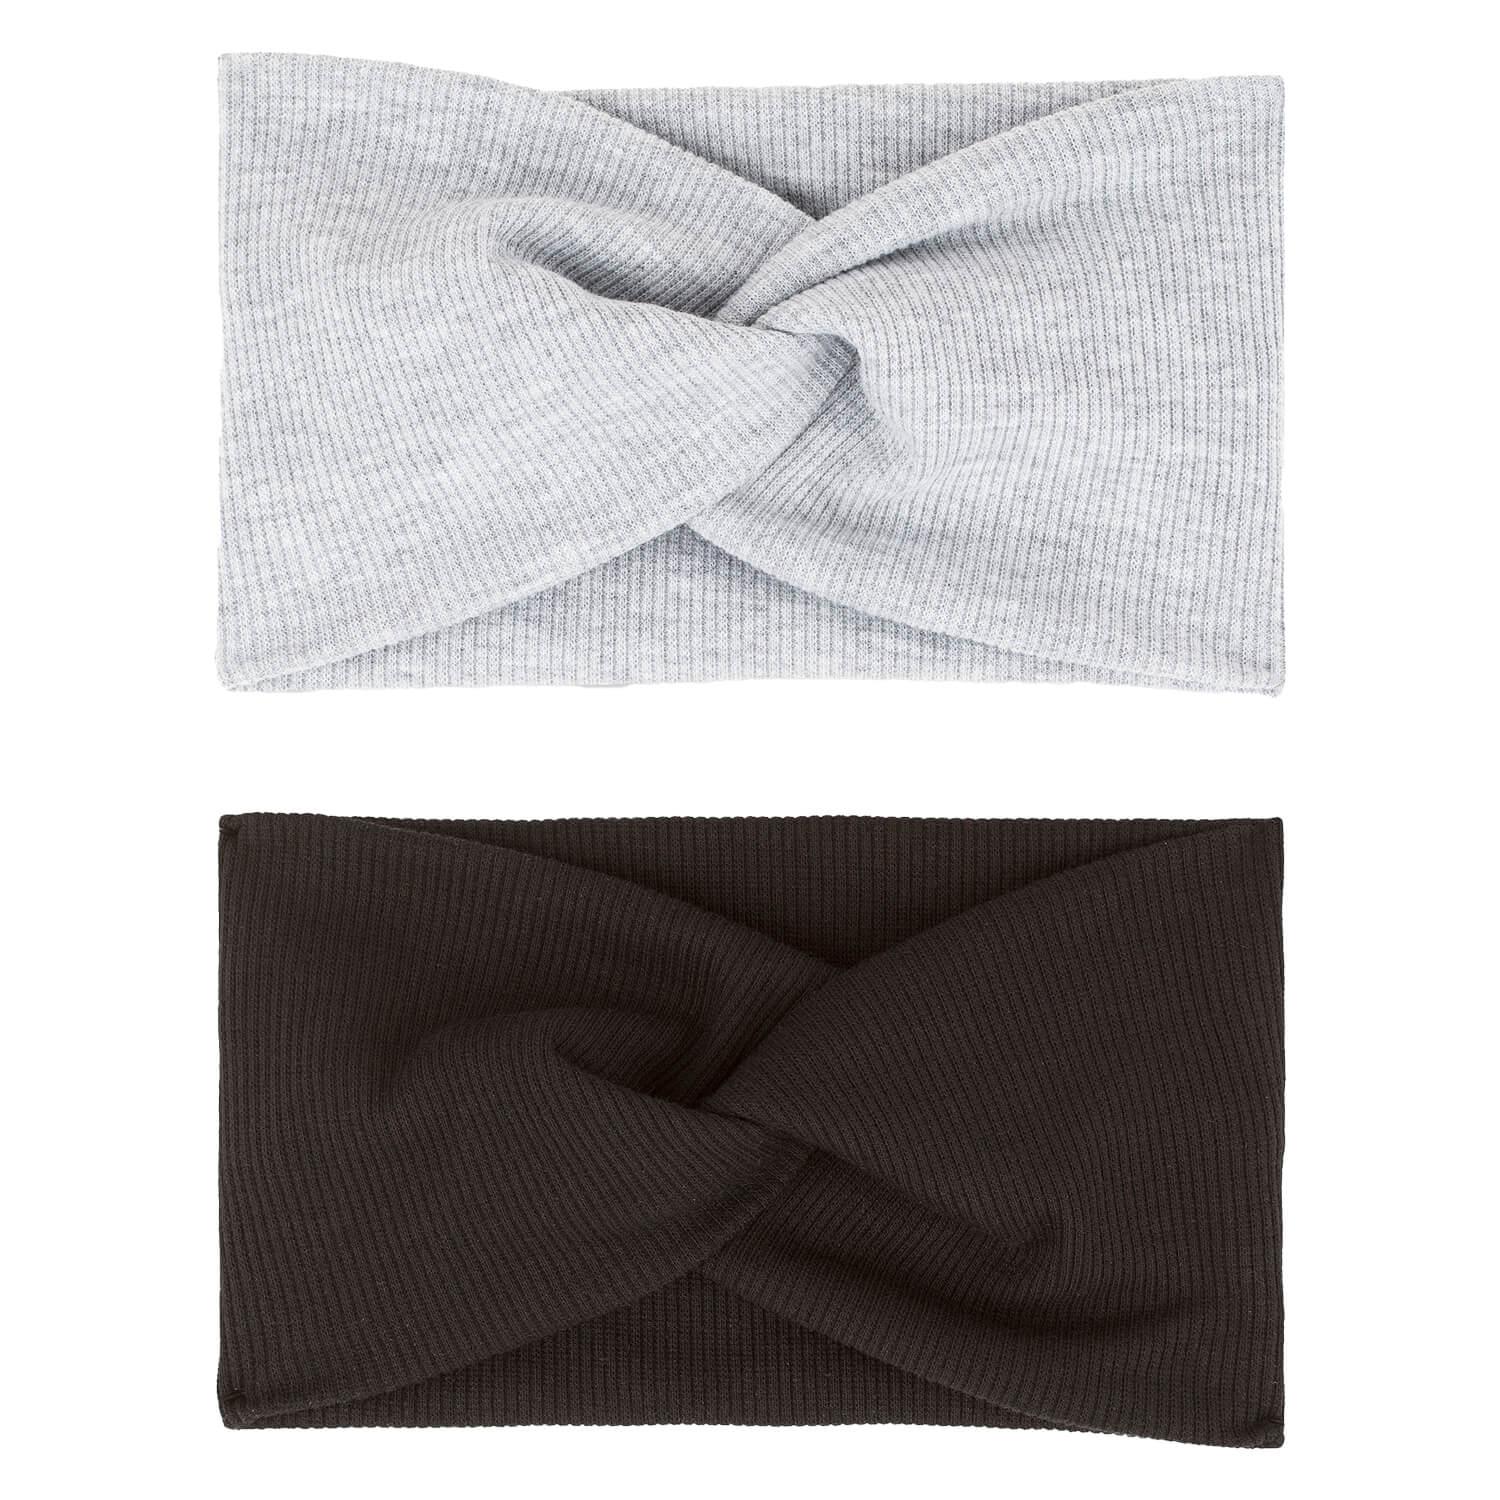 Hairband with knots, black & gray